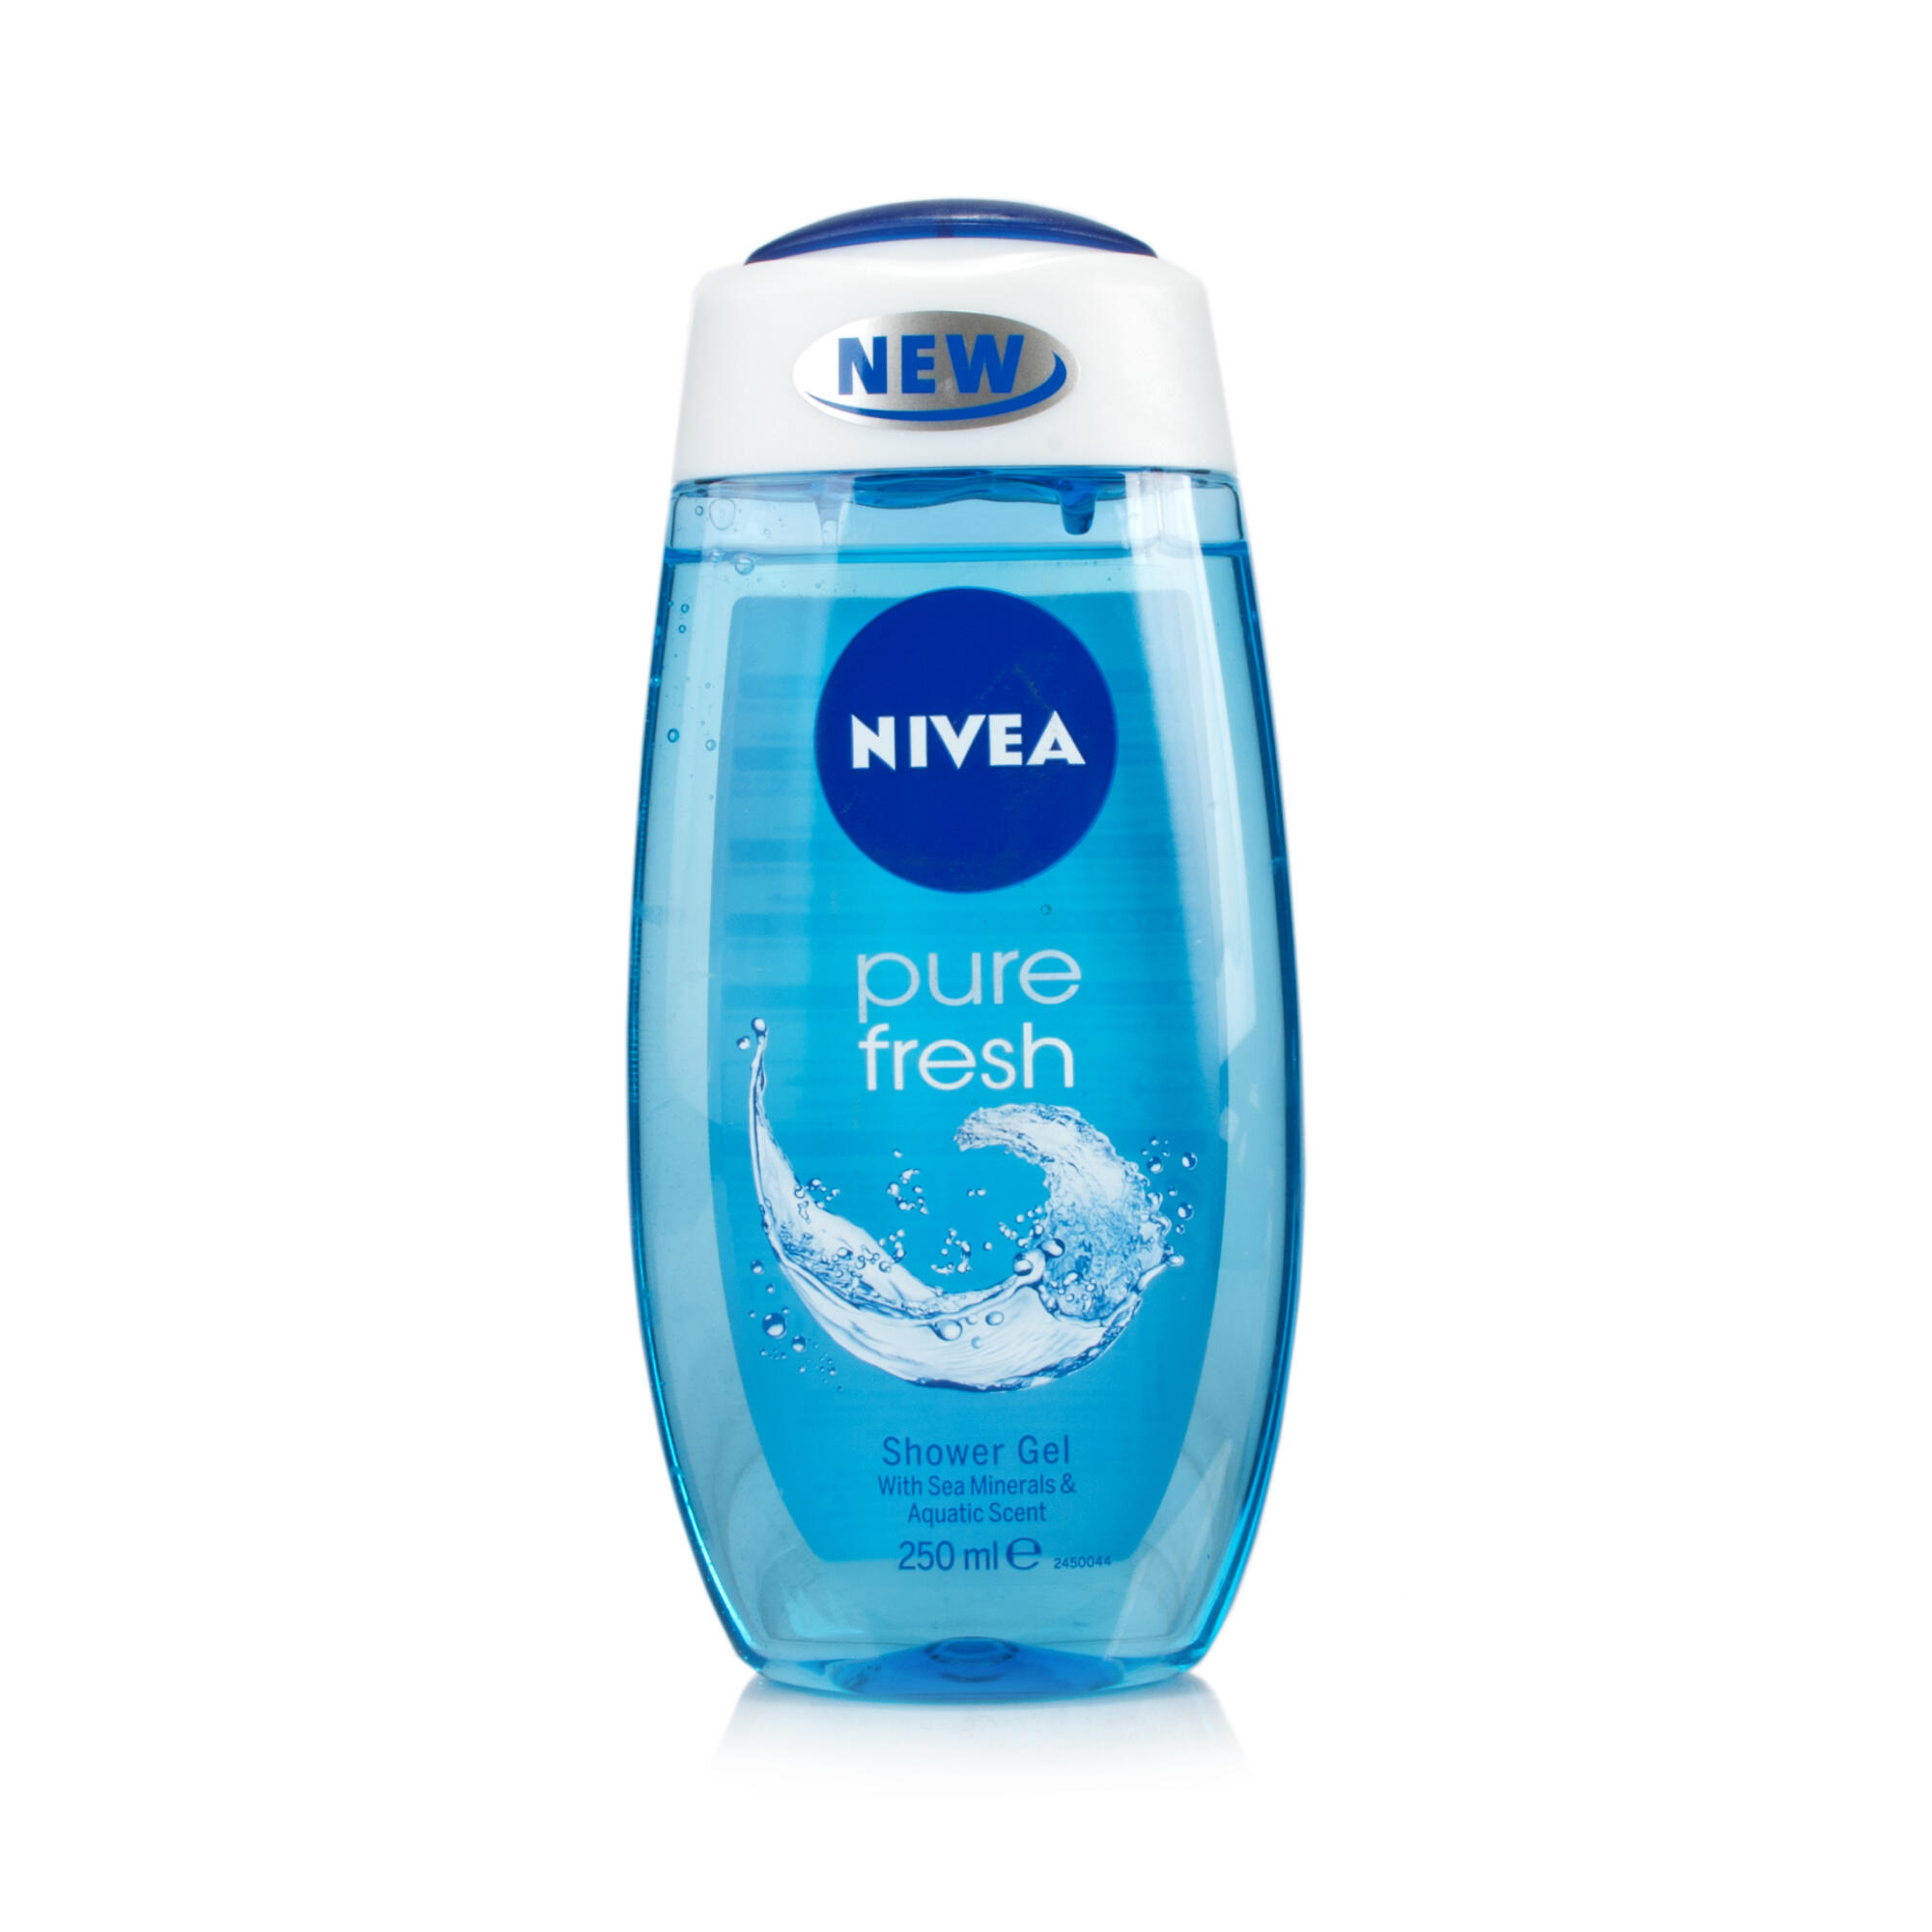 Nivea Pure Fresh Shower Gel | Chemist Direct